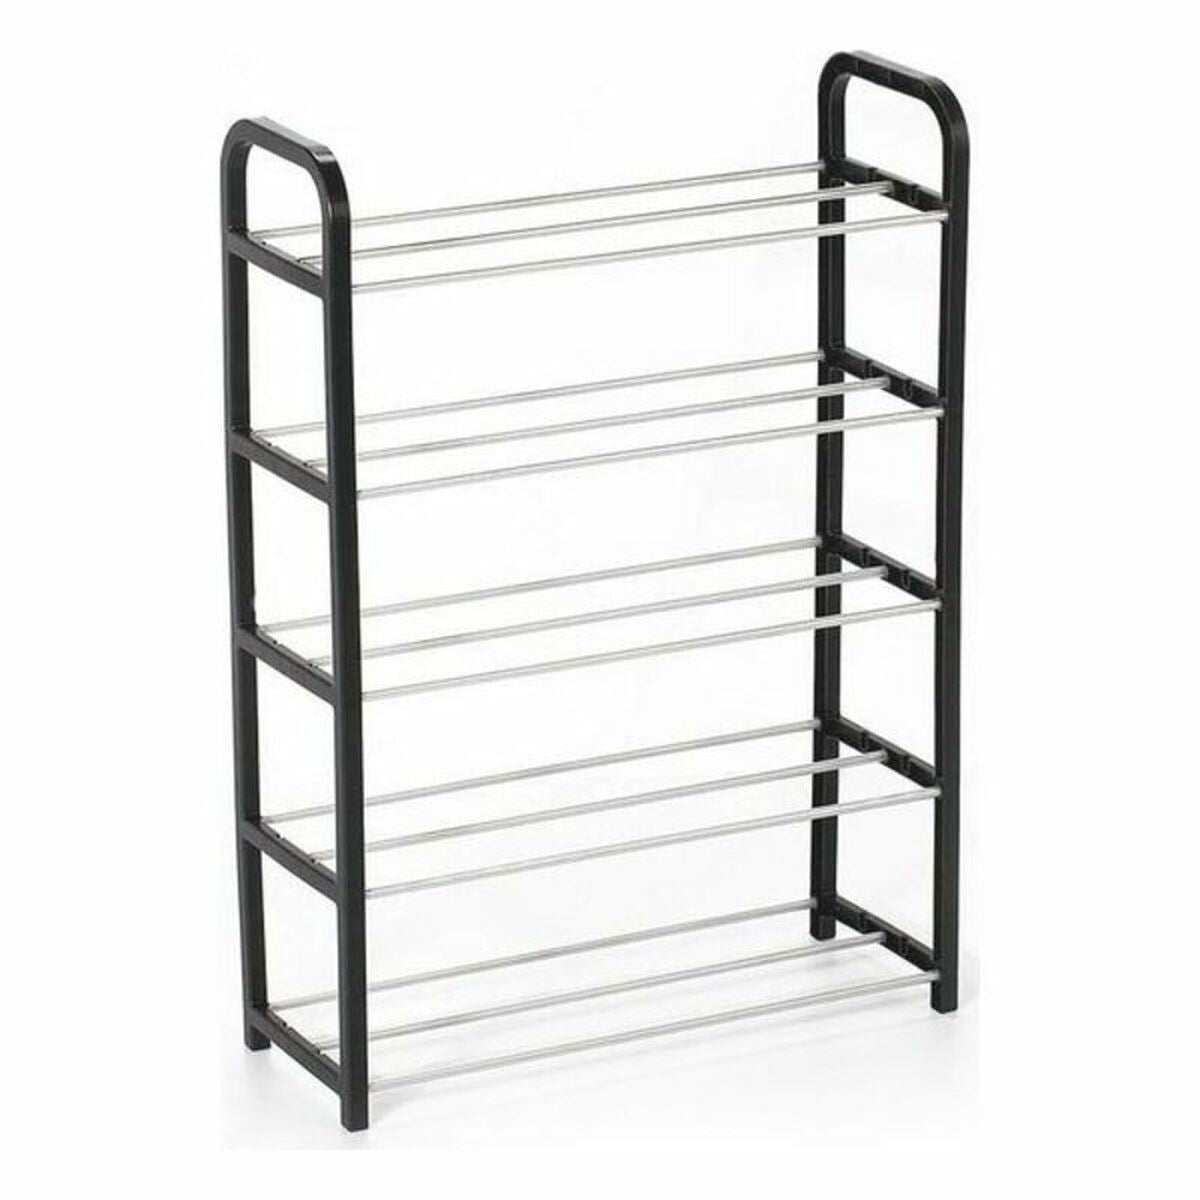 Shoe rack with 5 shelves black